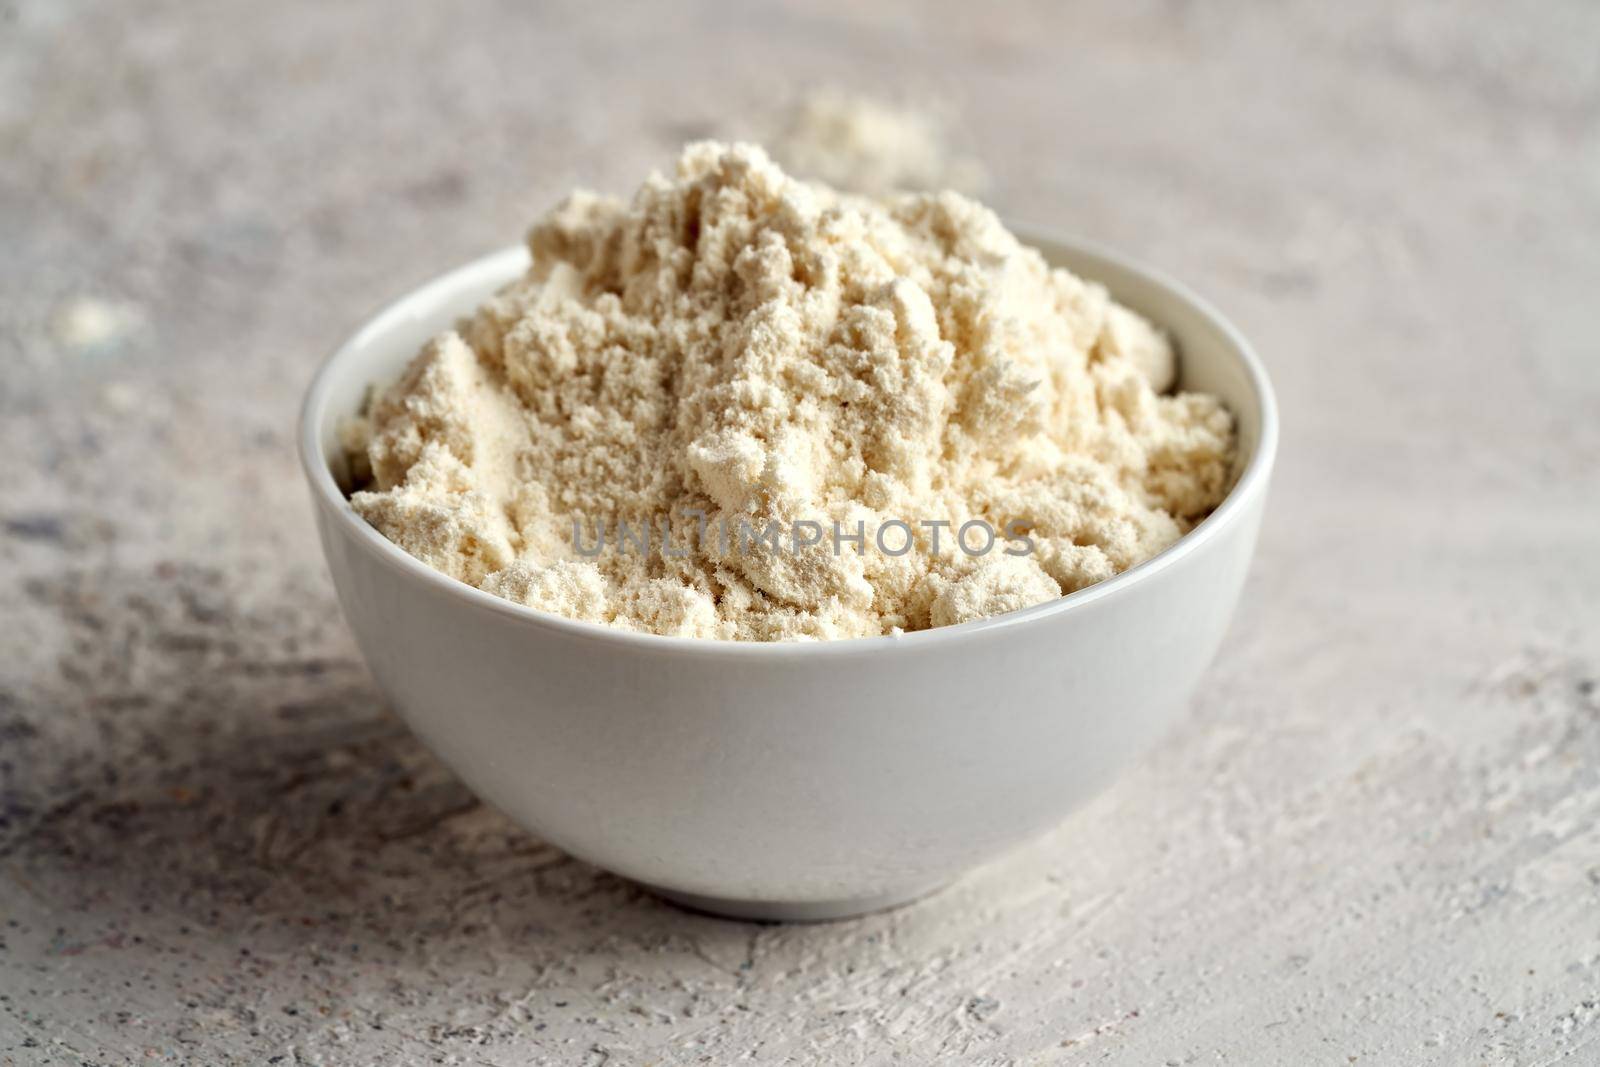 Whey protein powder in a white bowl